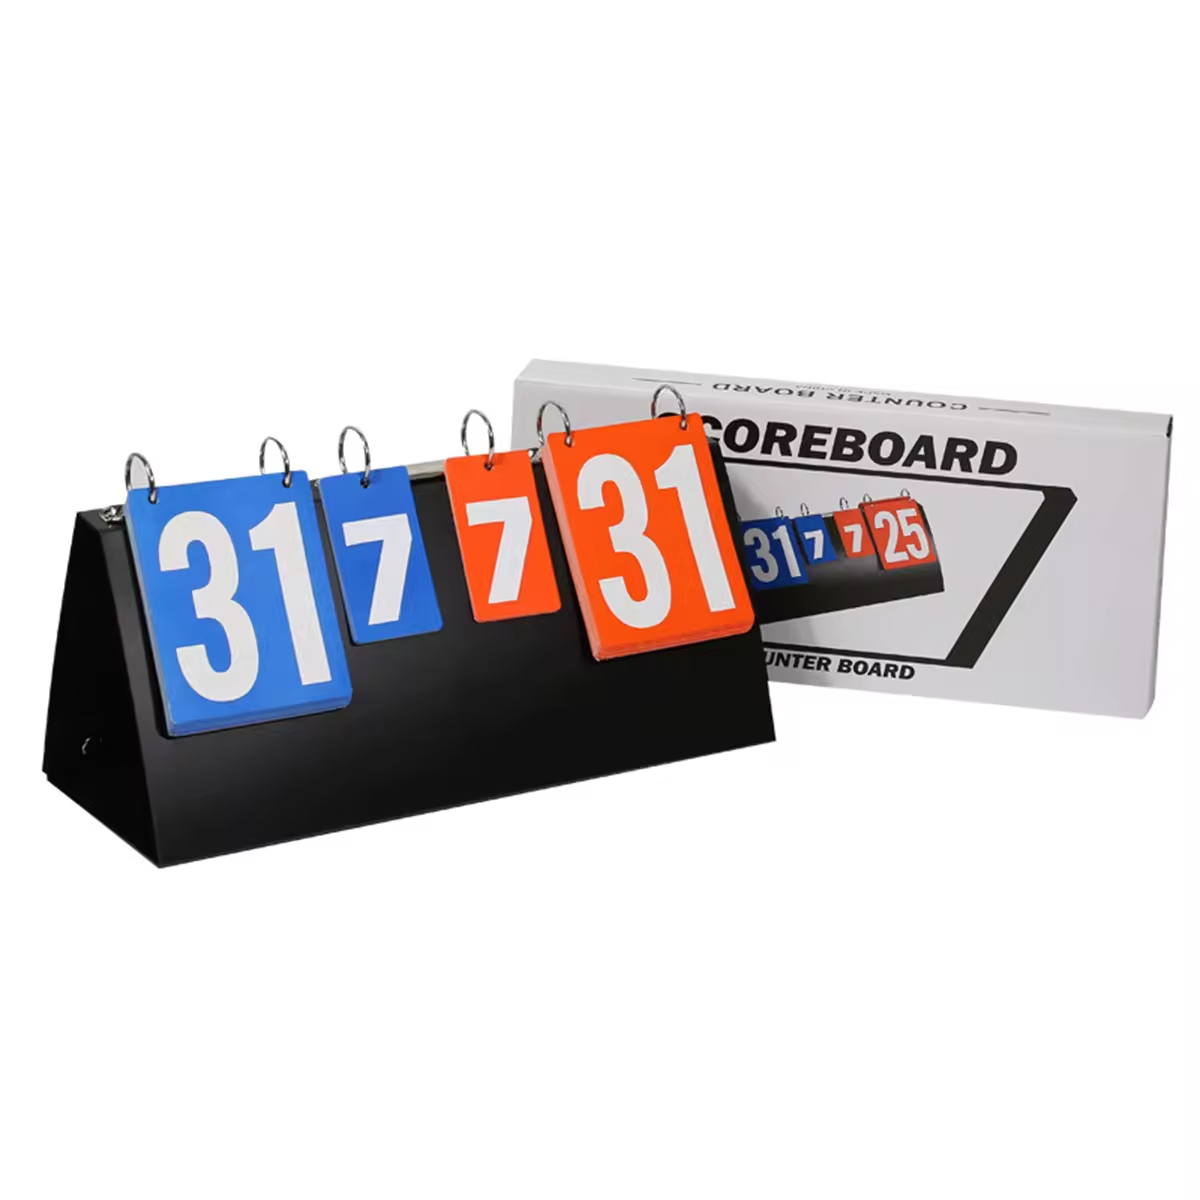 Scoreboard Score Keeper for Indoor & Outdoor Sports Ping Pong Baseball Tennis Basketball Scorekeeper Portable Flips up to 99